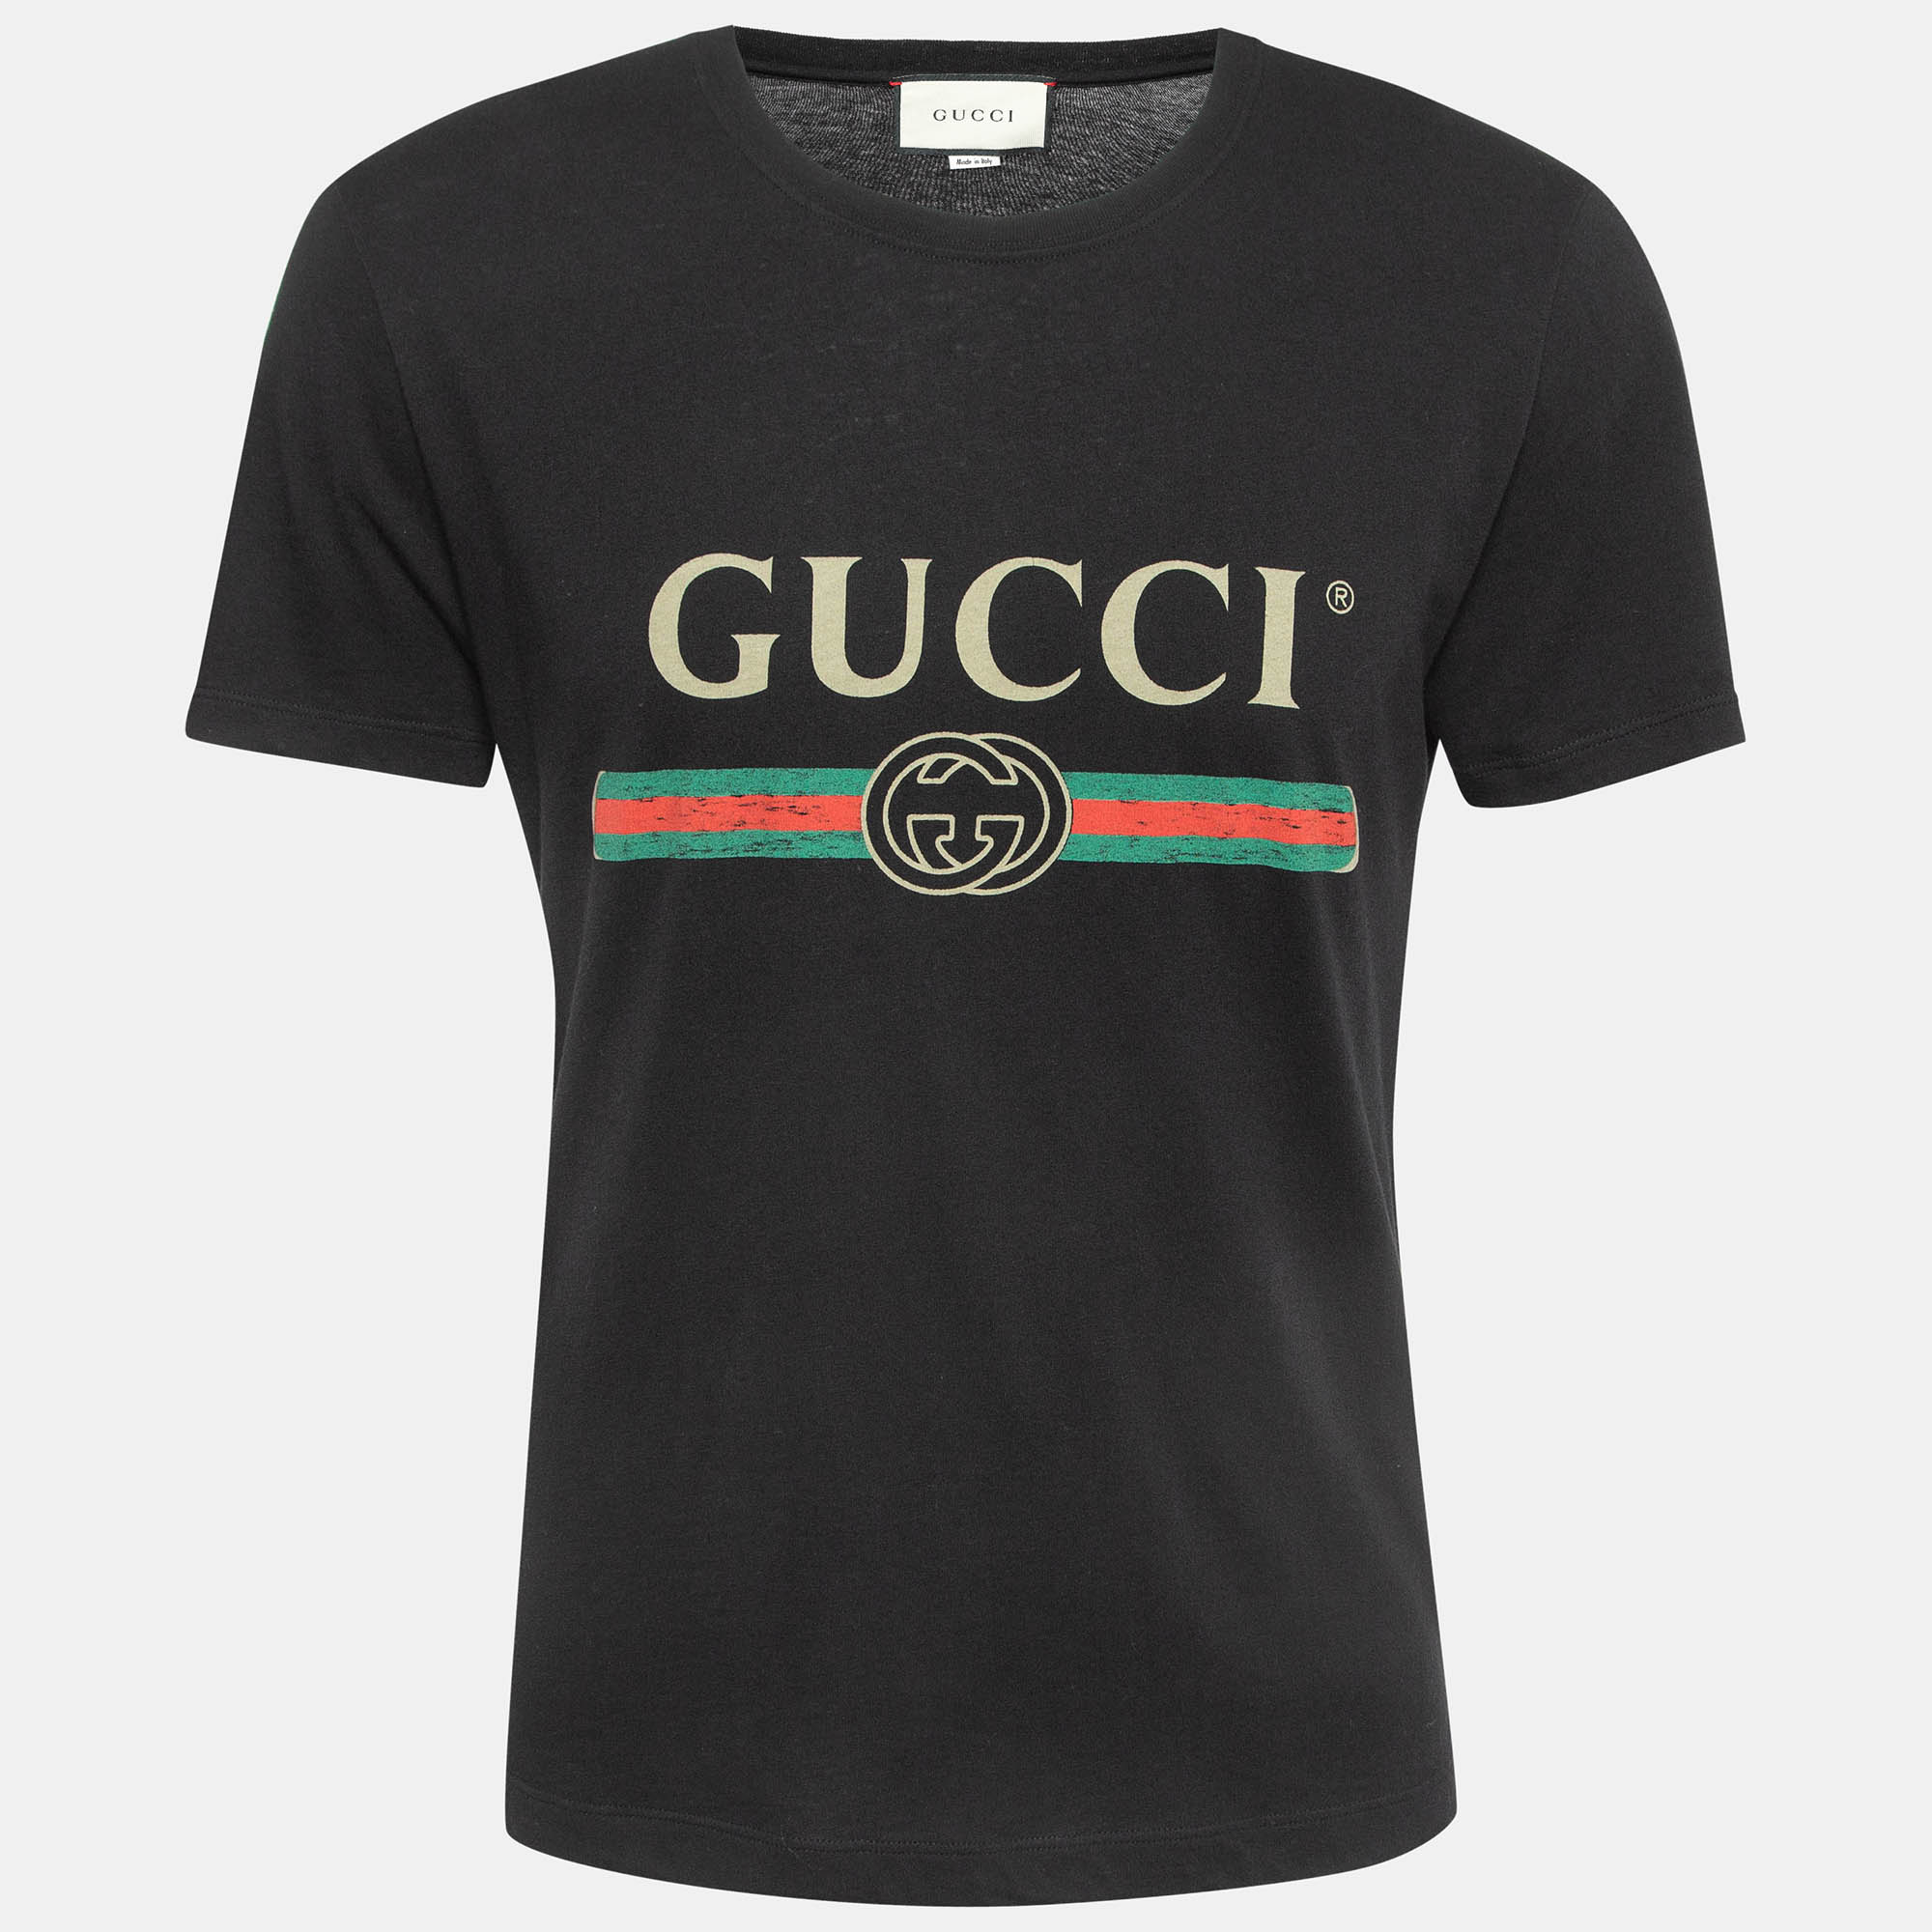 Gucci black logo print cotton distressed t-shirt xs